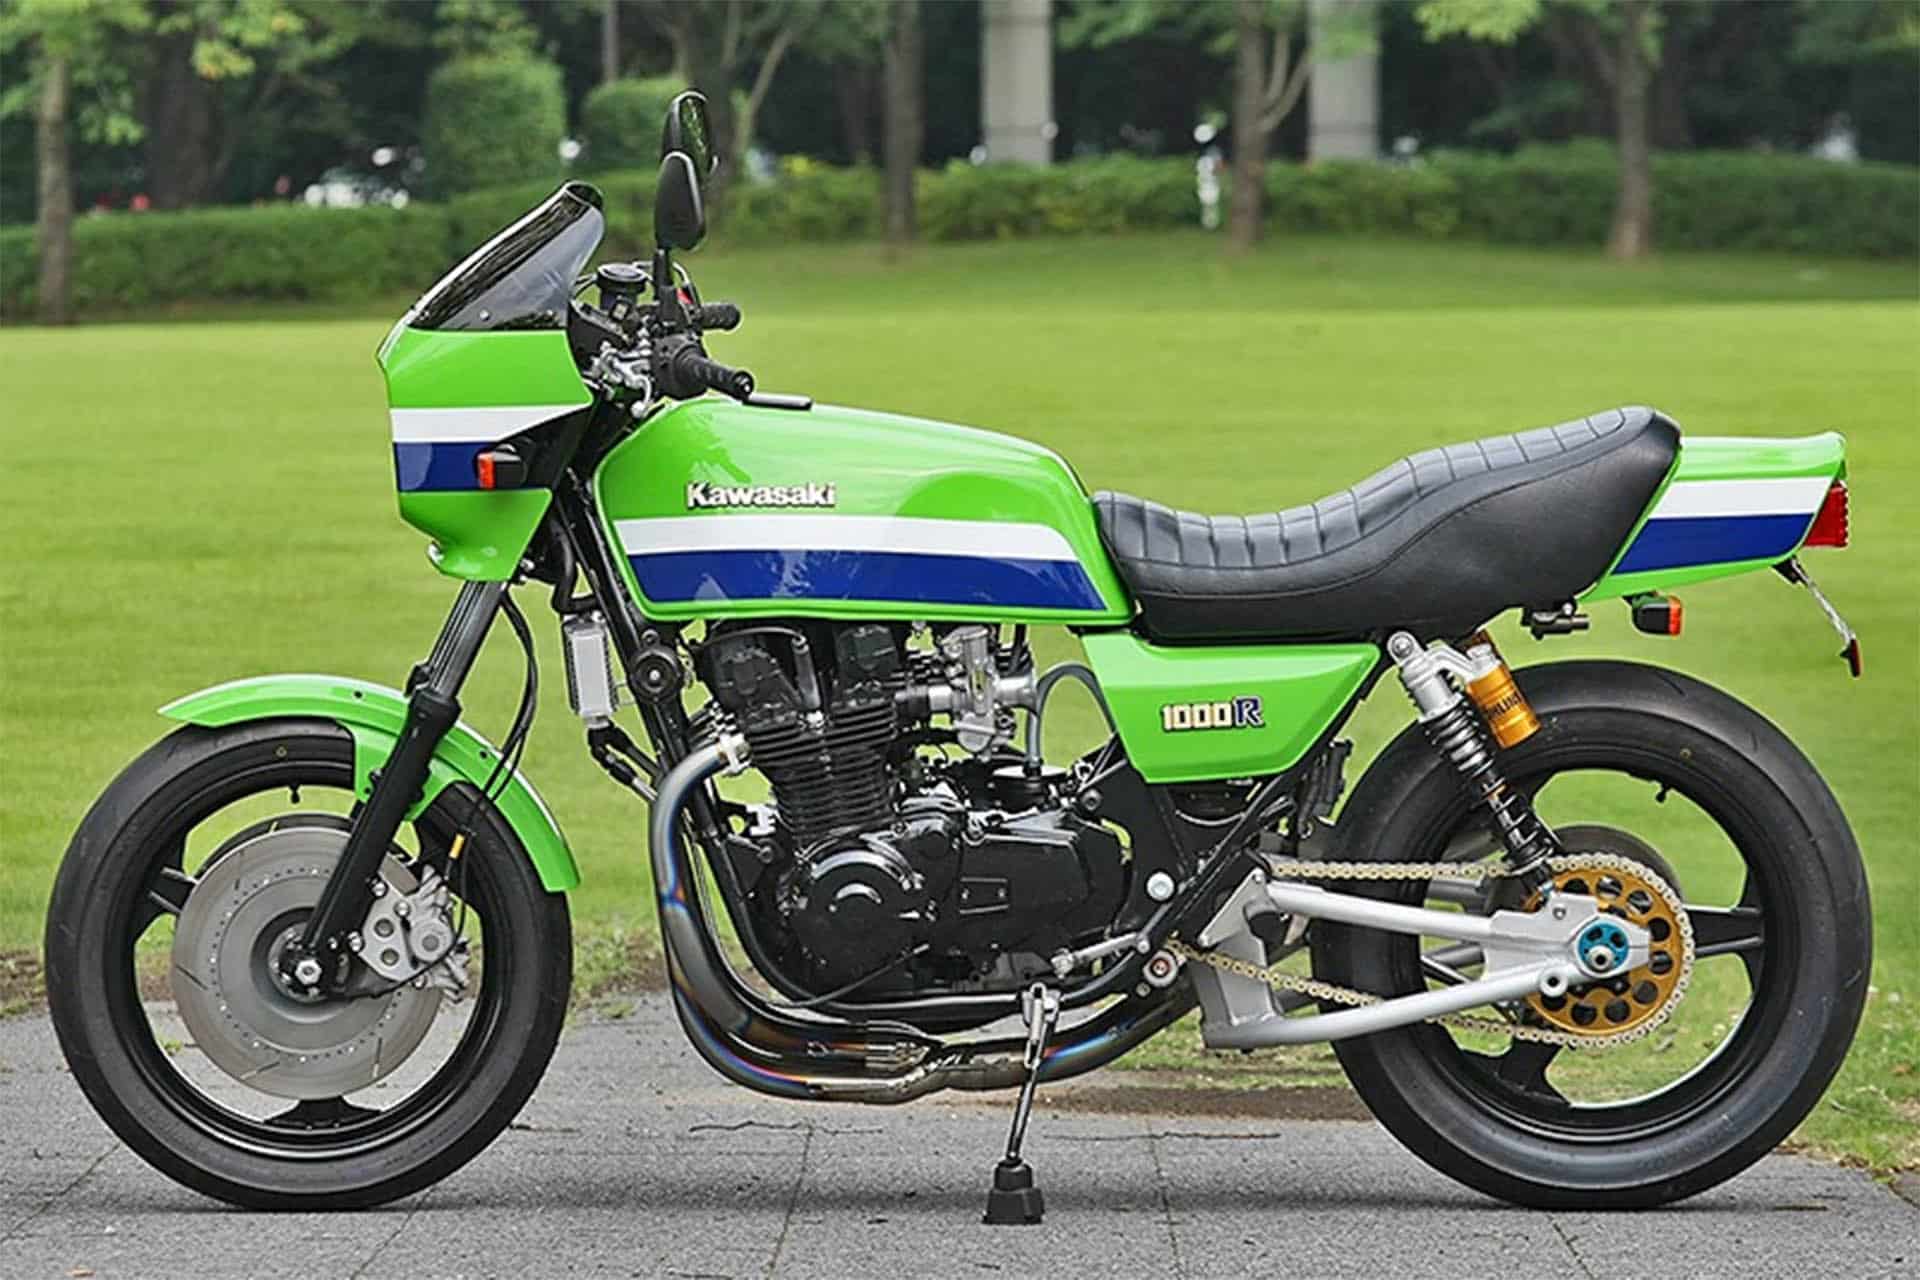 La Kawasaki Z 1000 J es una moto icónica